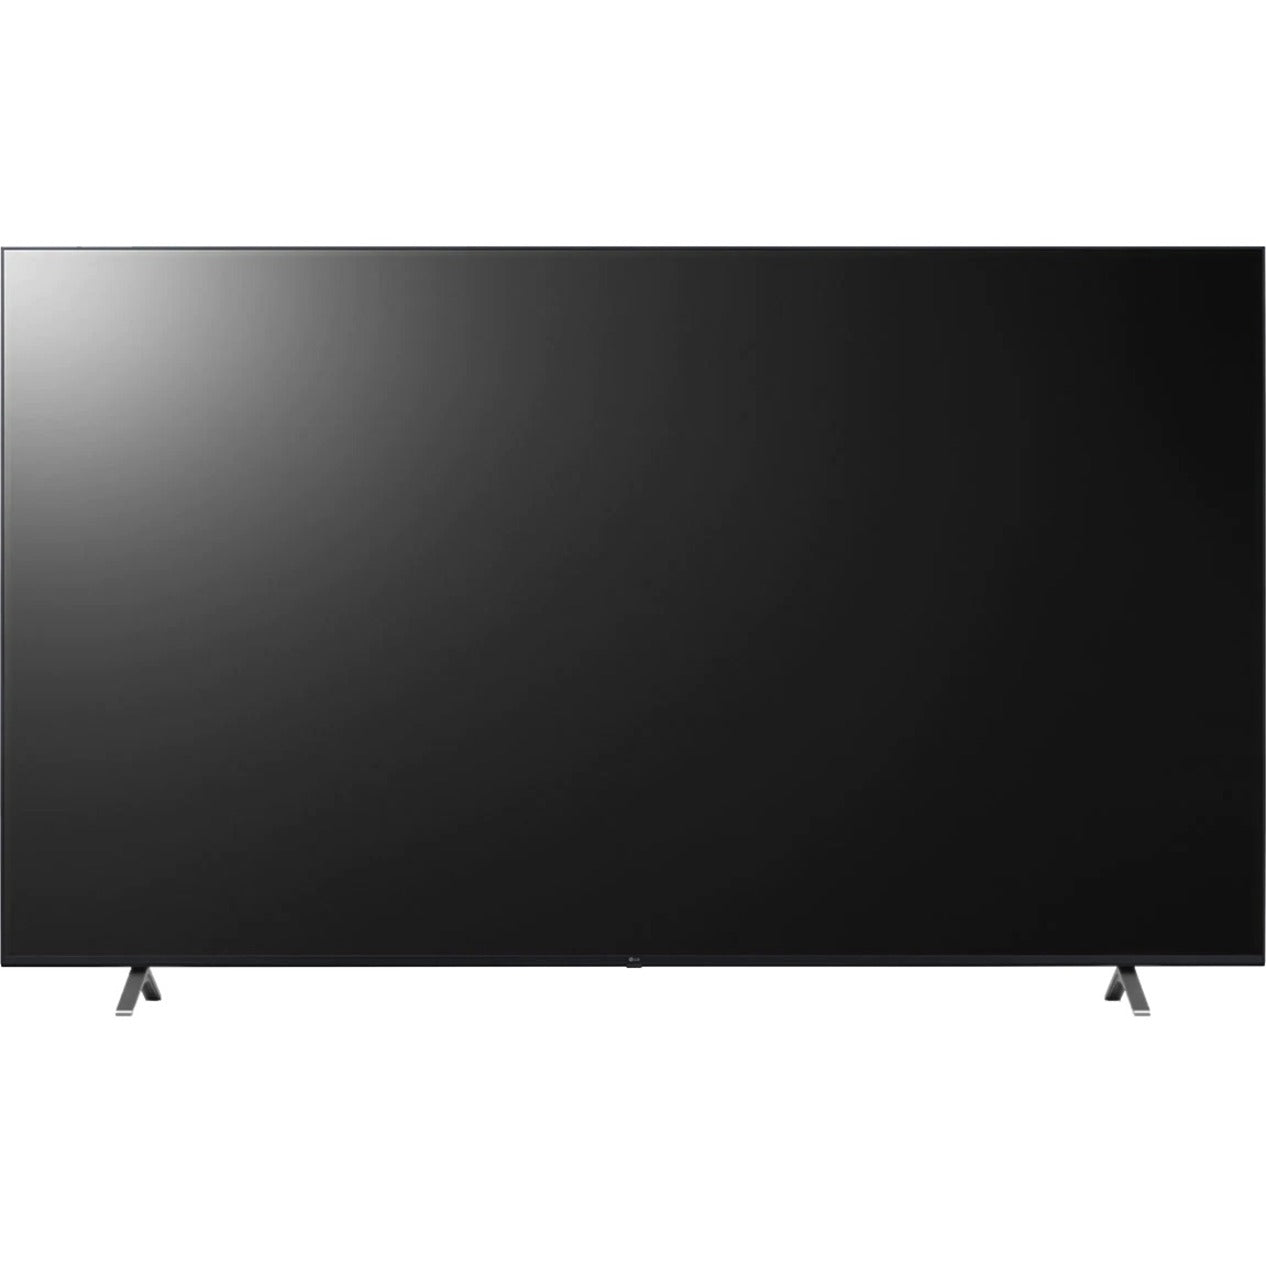 LG 65UR640S9UD Smart LED-LCD TV, 65" UHD, 3 HDMI, 1 RS232, 1 USB, Speaker, Stand